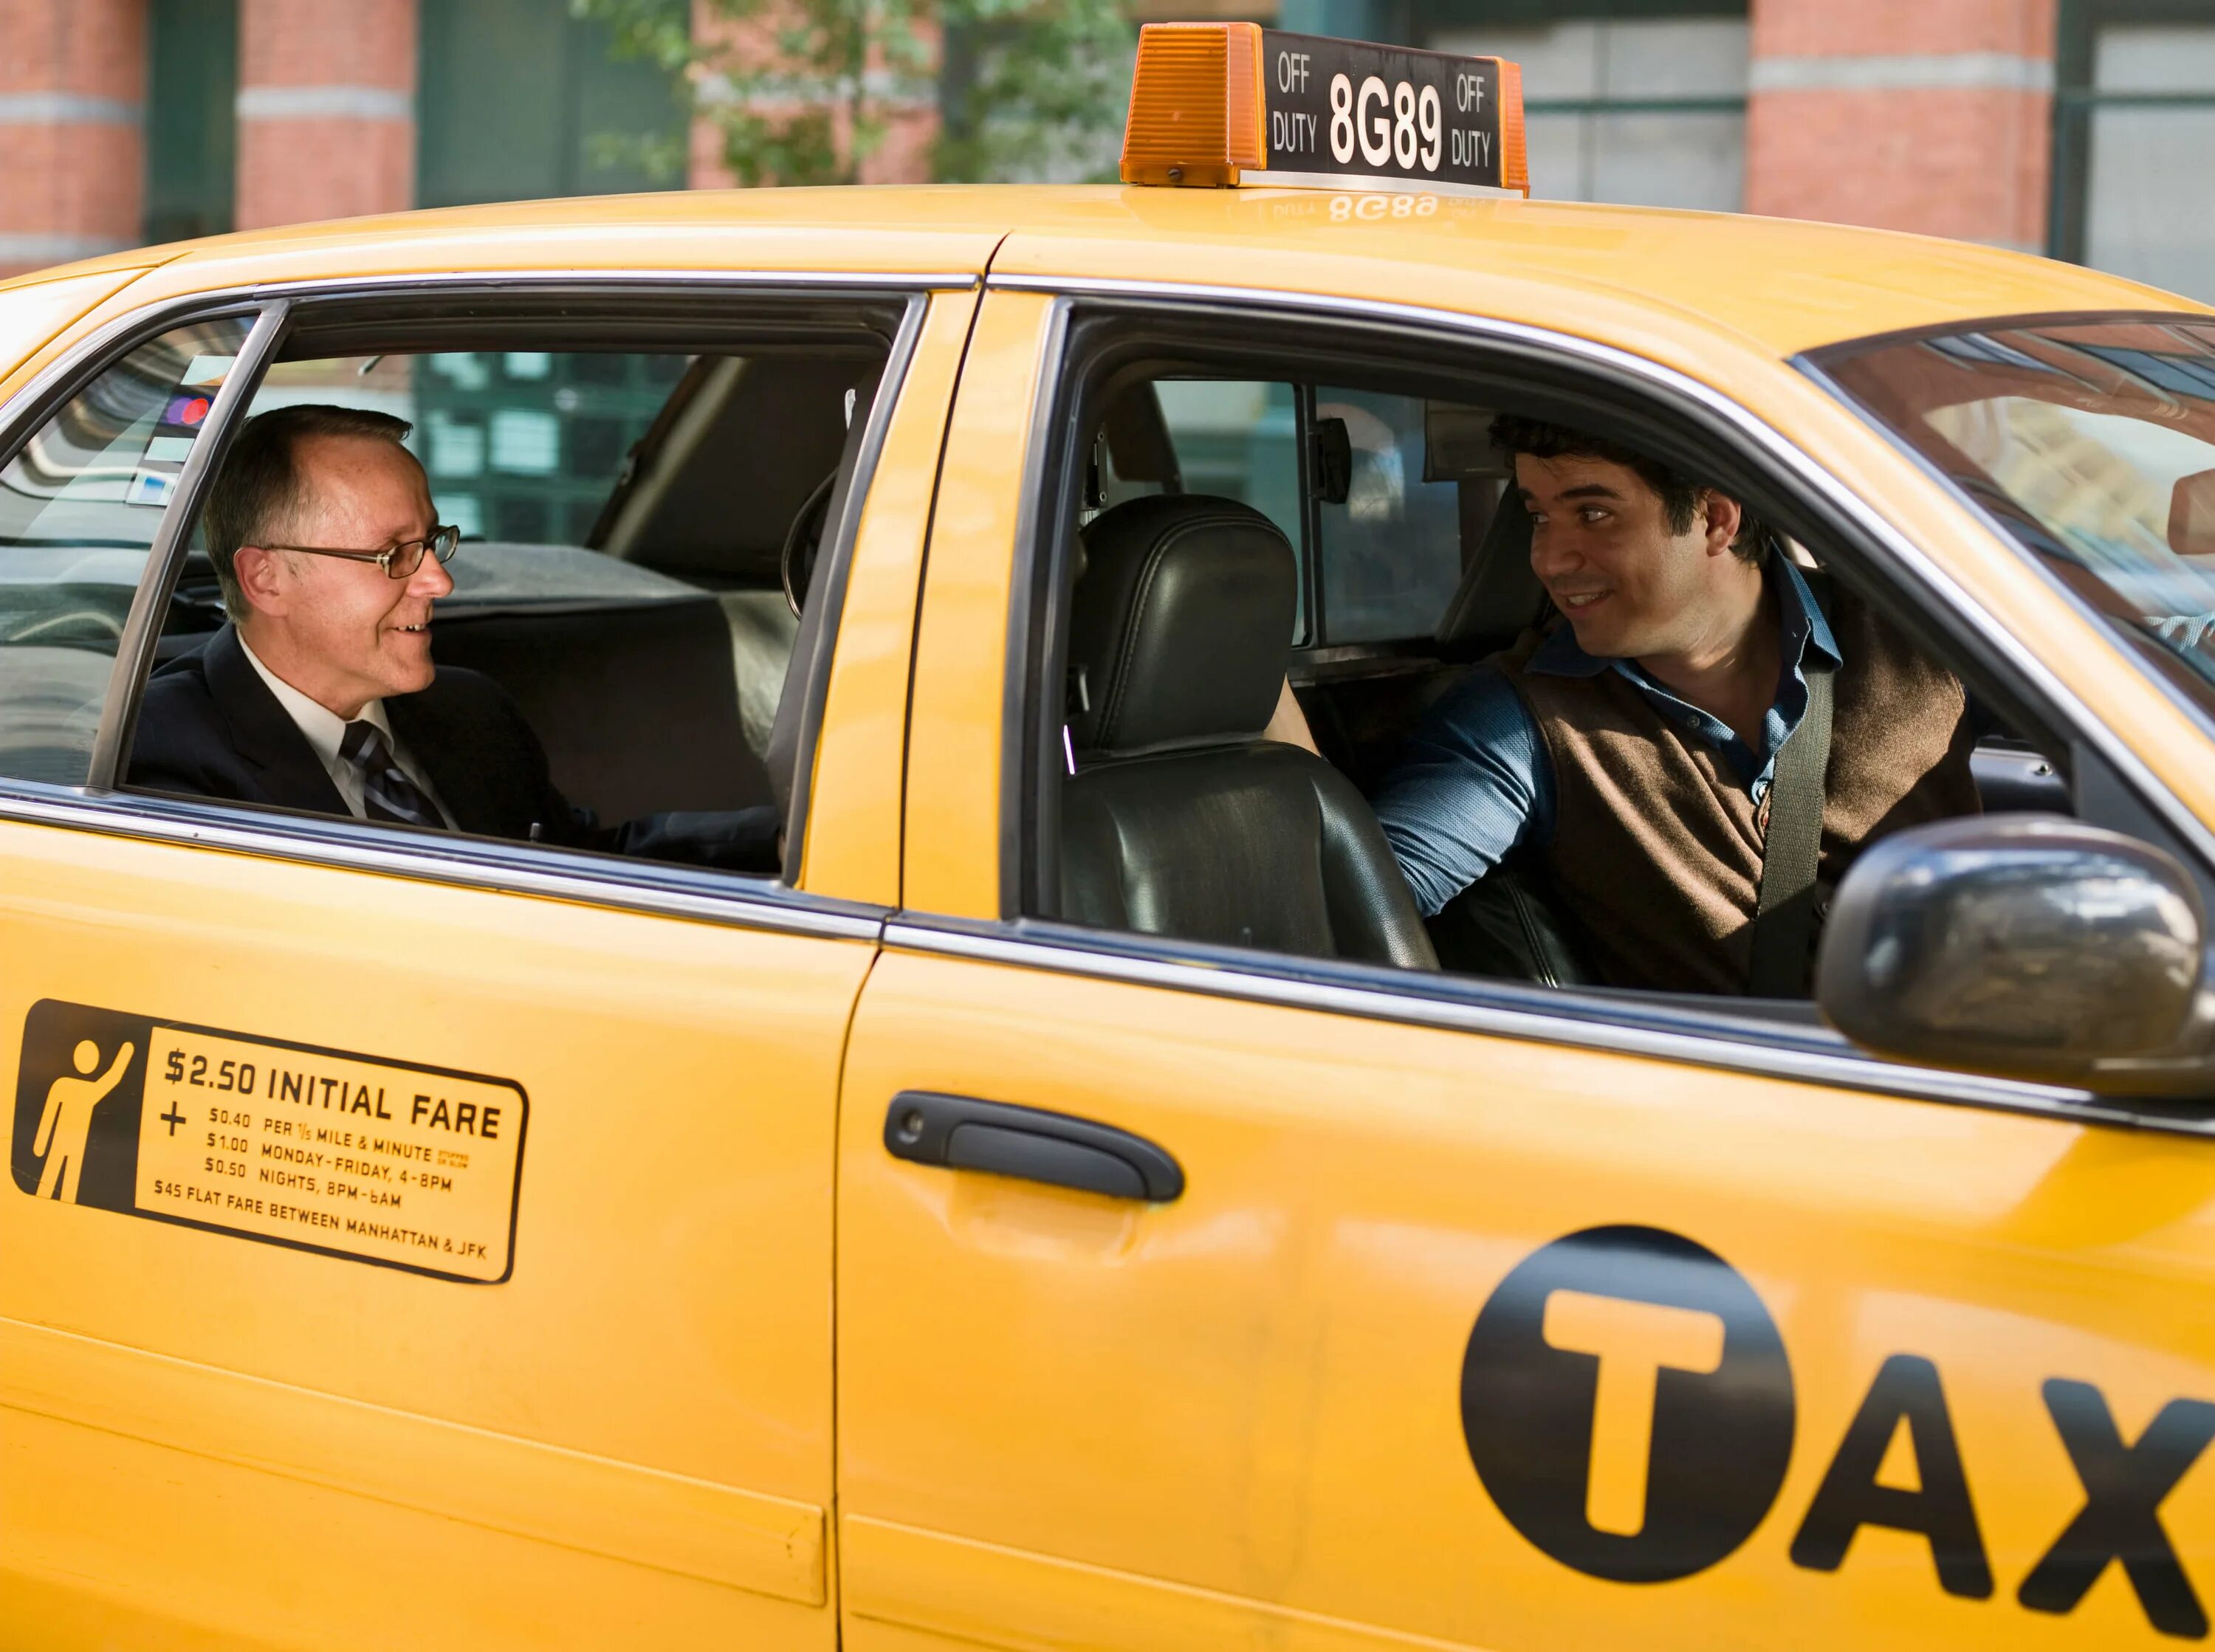 Таксиста понравился. Такси. Пассажир такси. Таксист и пассажир. Такси едет.